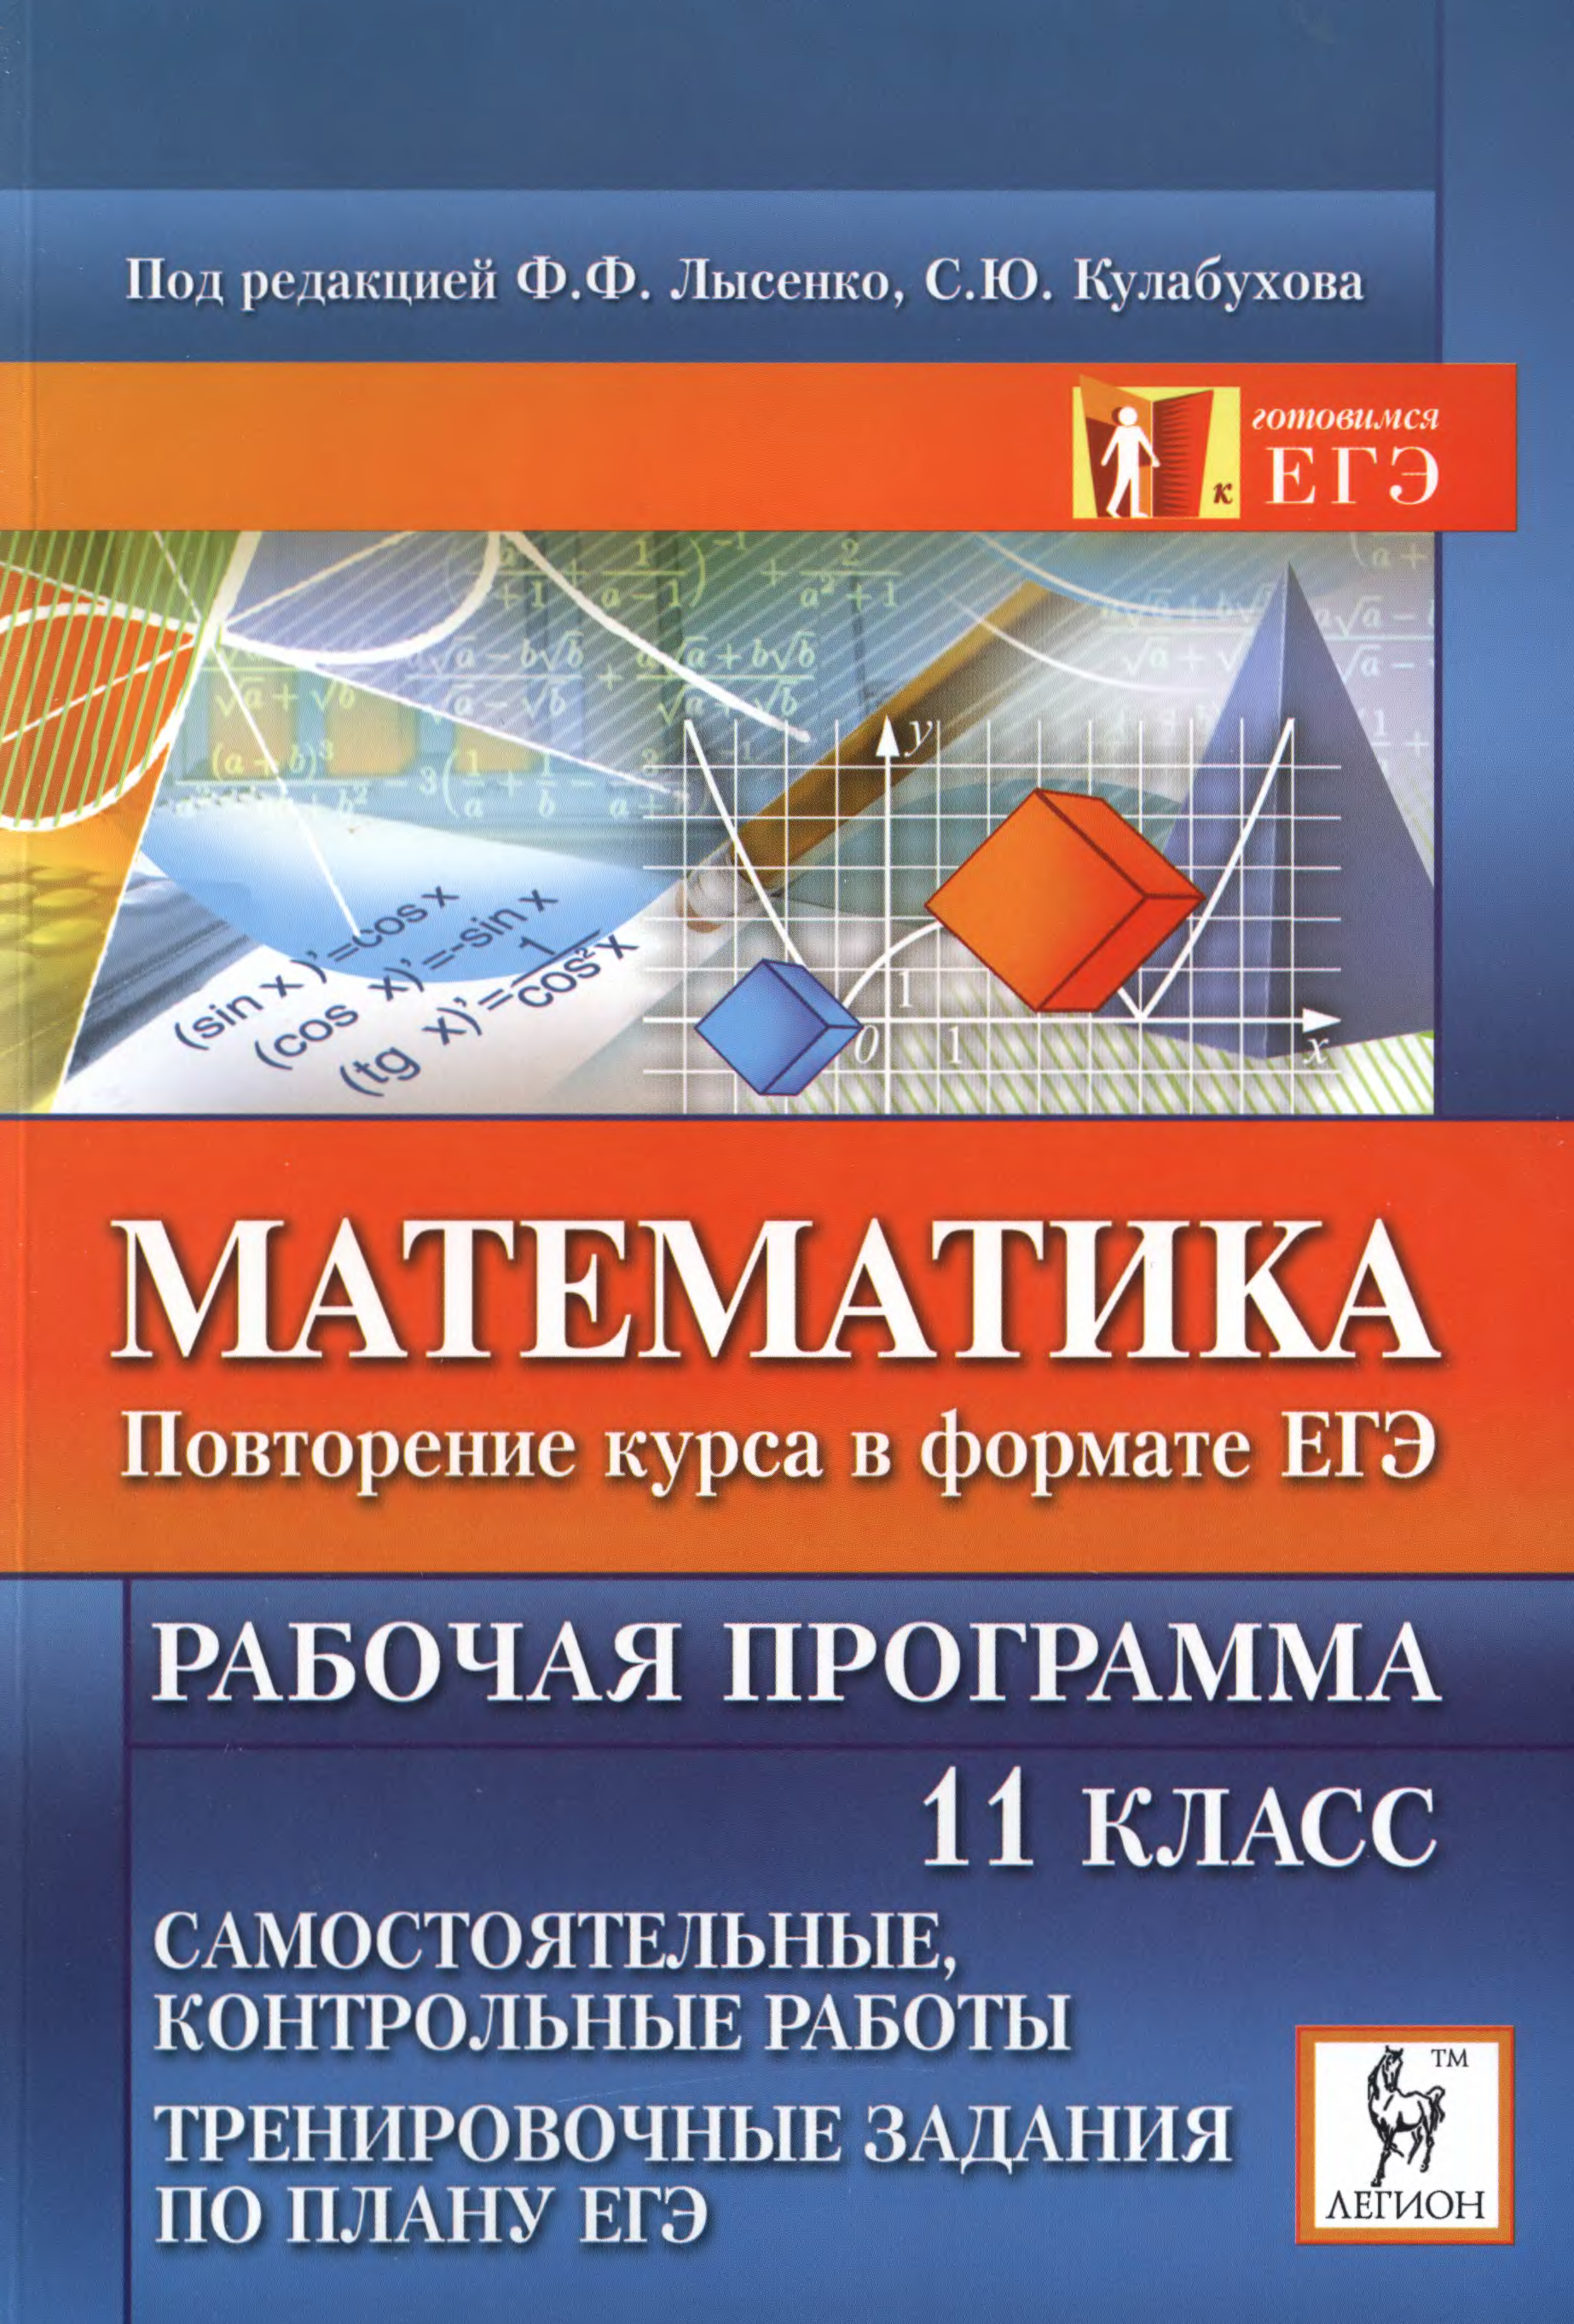 Повторяем математику 11. Повторение ЕГЭ математика. Программа 11 класса математика. ЕГЭ 2007 математика. Курс математика с 0 Лысенко.